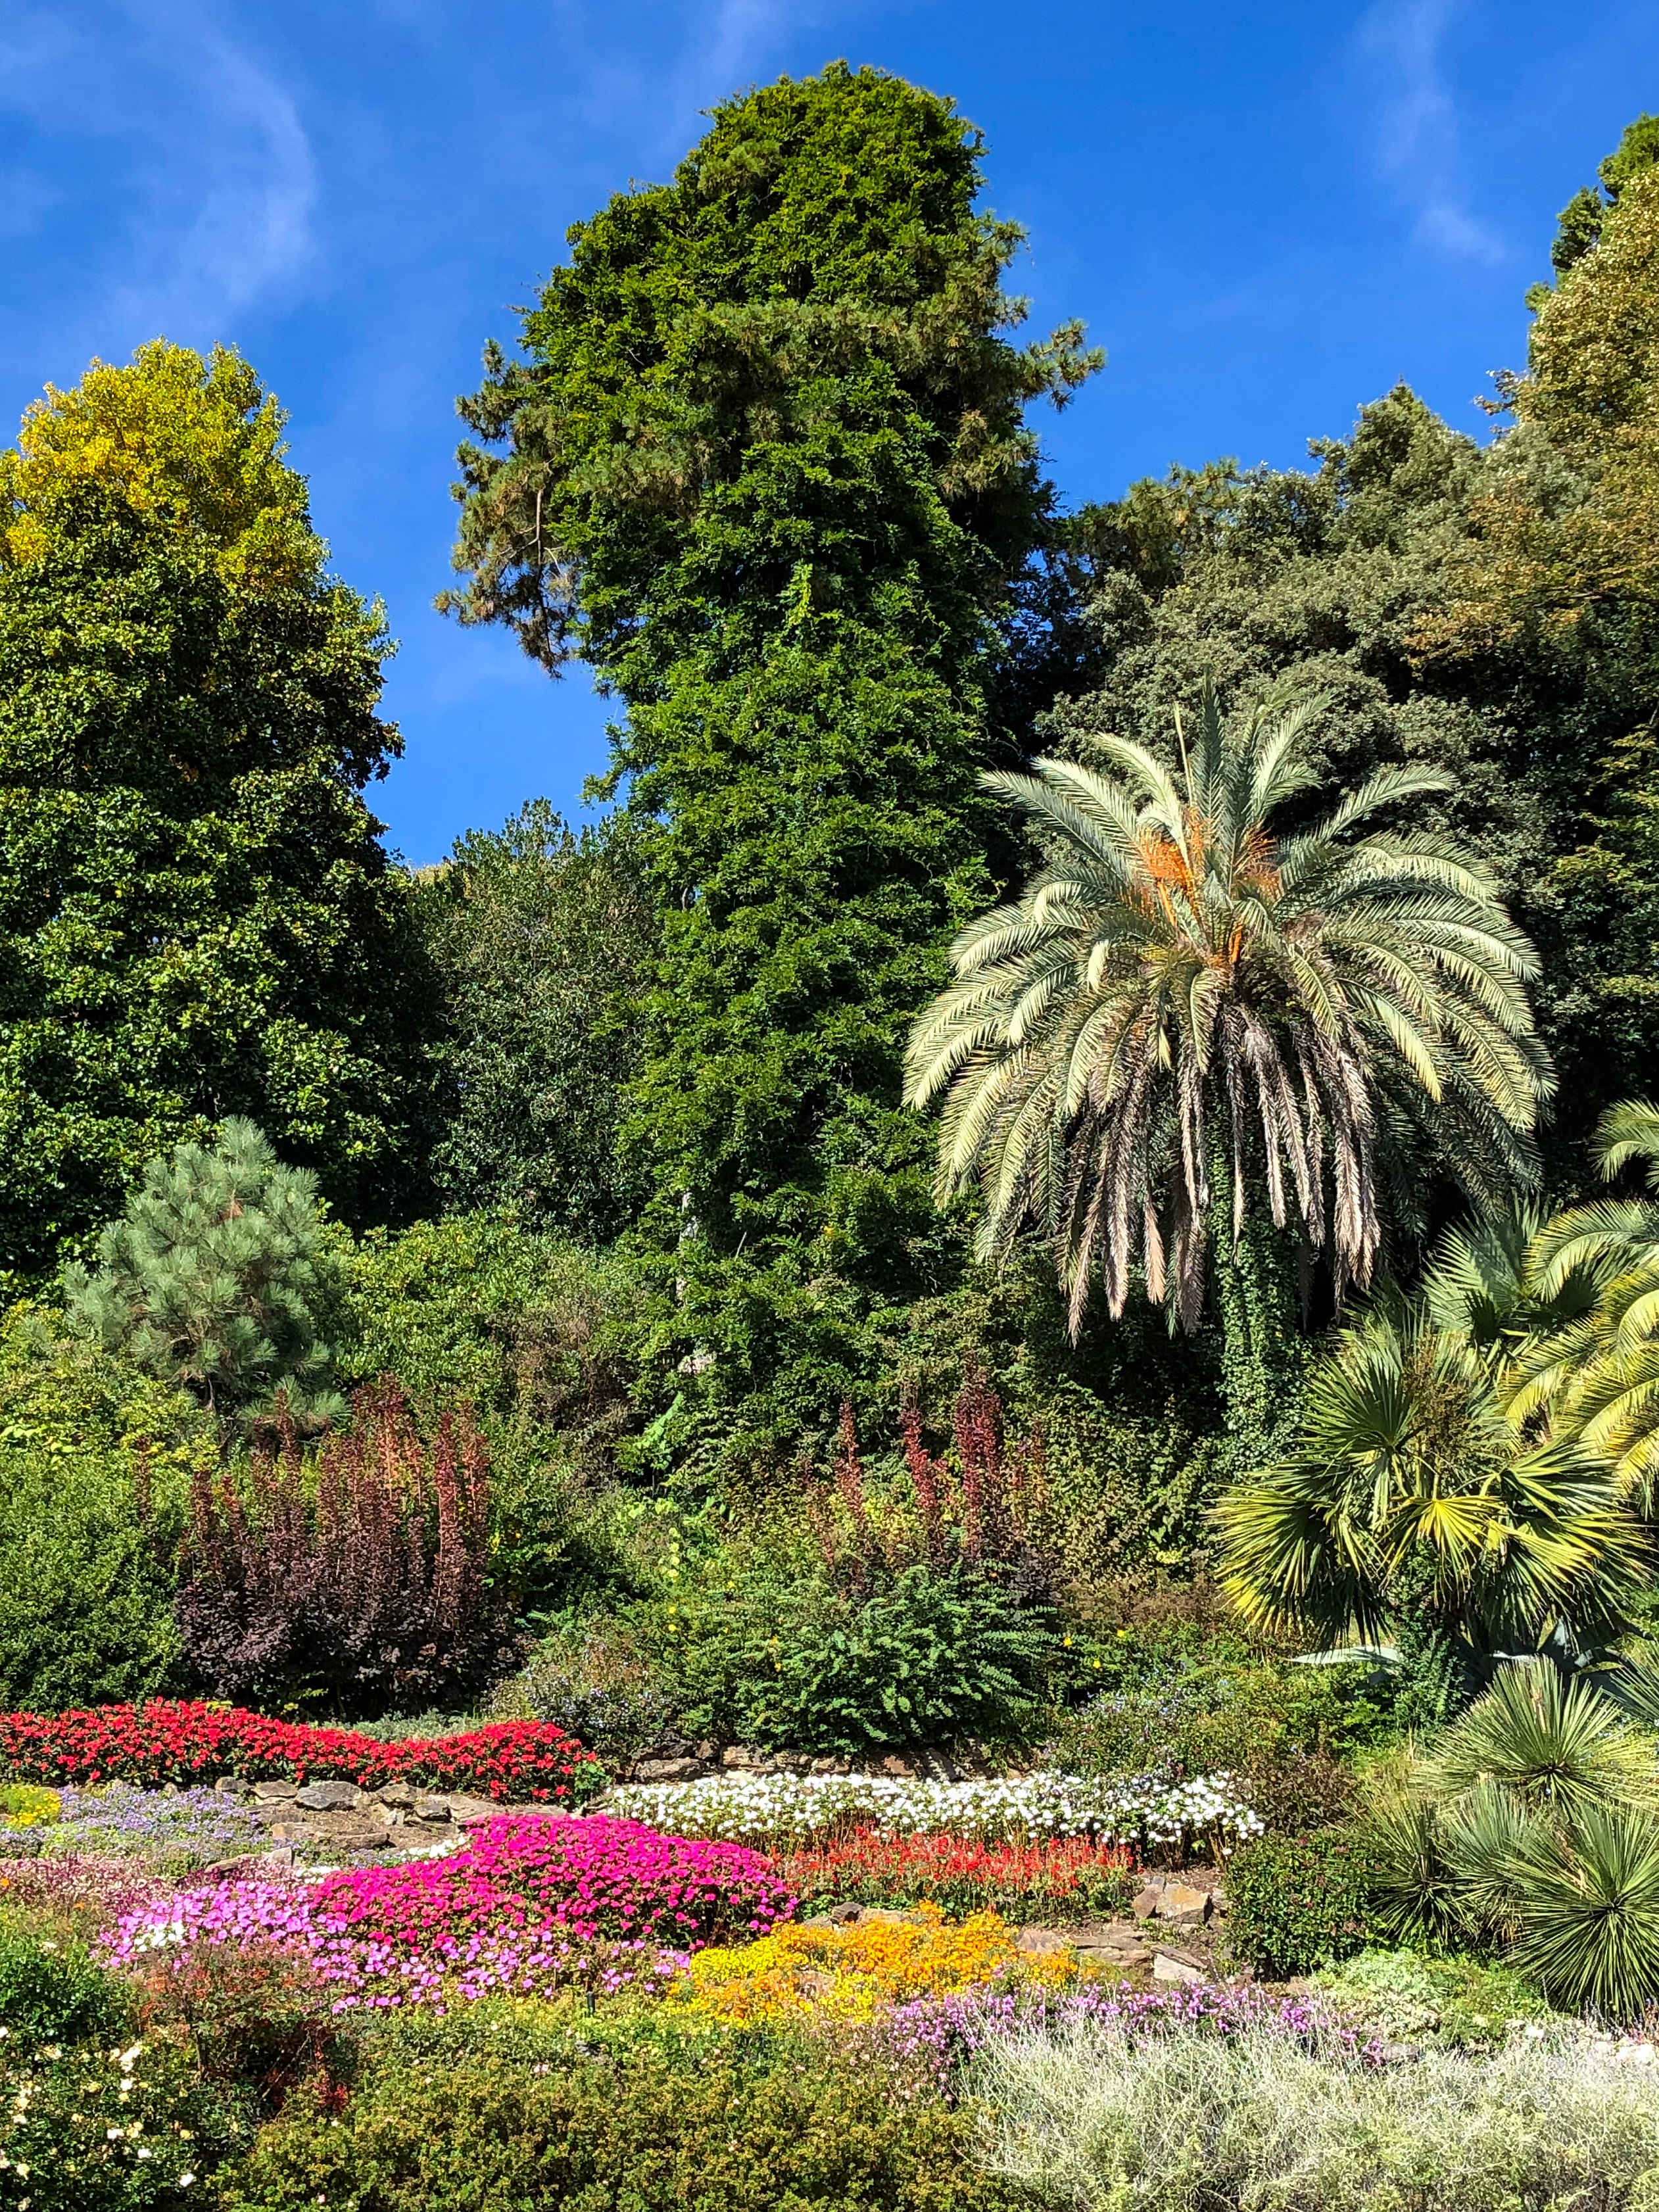 Botanical Gardens of Villa Carlotta in Tremezzina, Italy